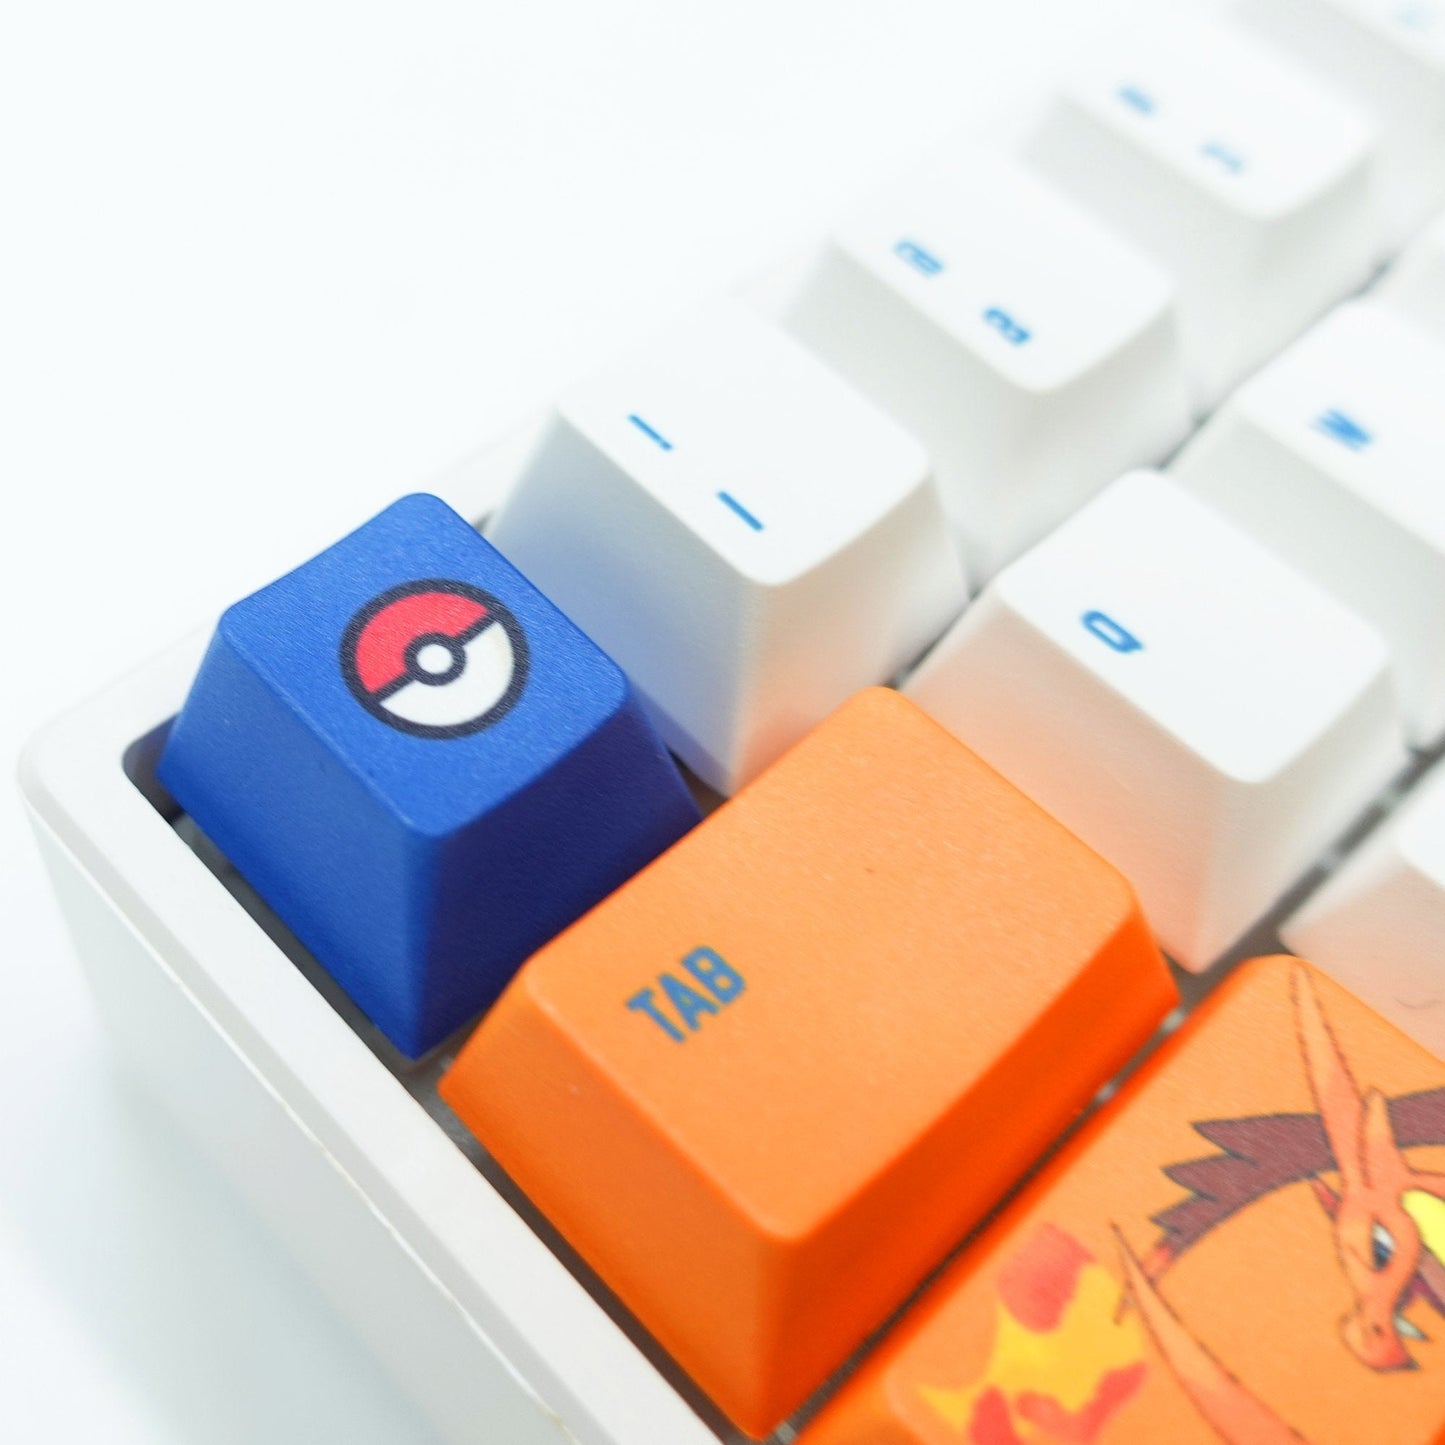 Pokemon Keycaps | Charizard Y Keycaps - Goblintechkeys